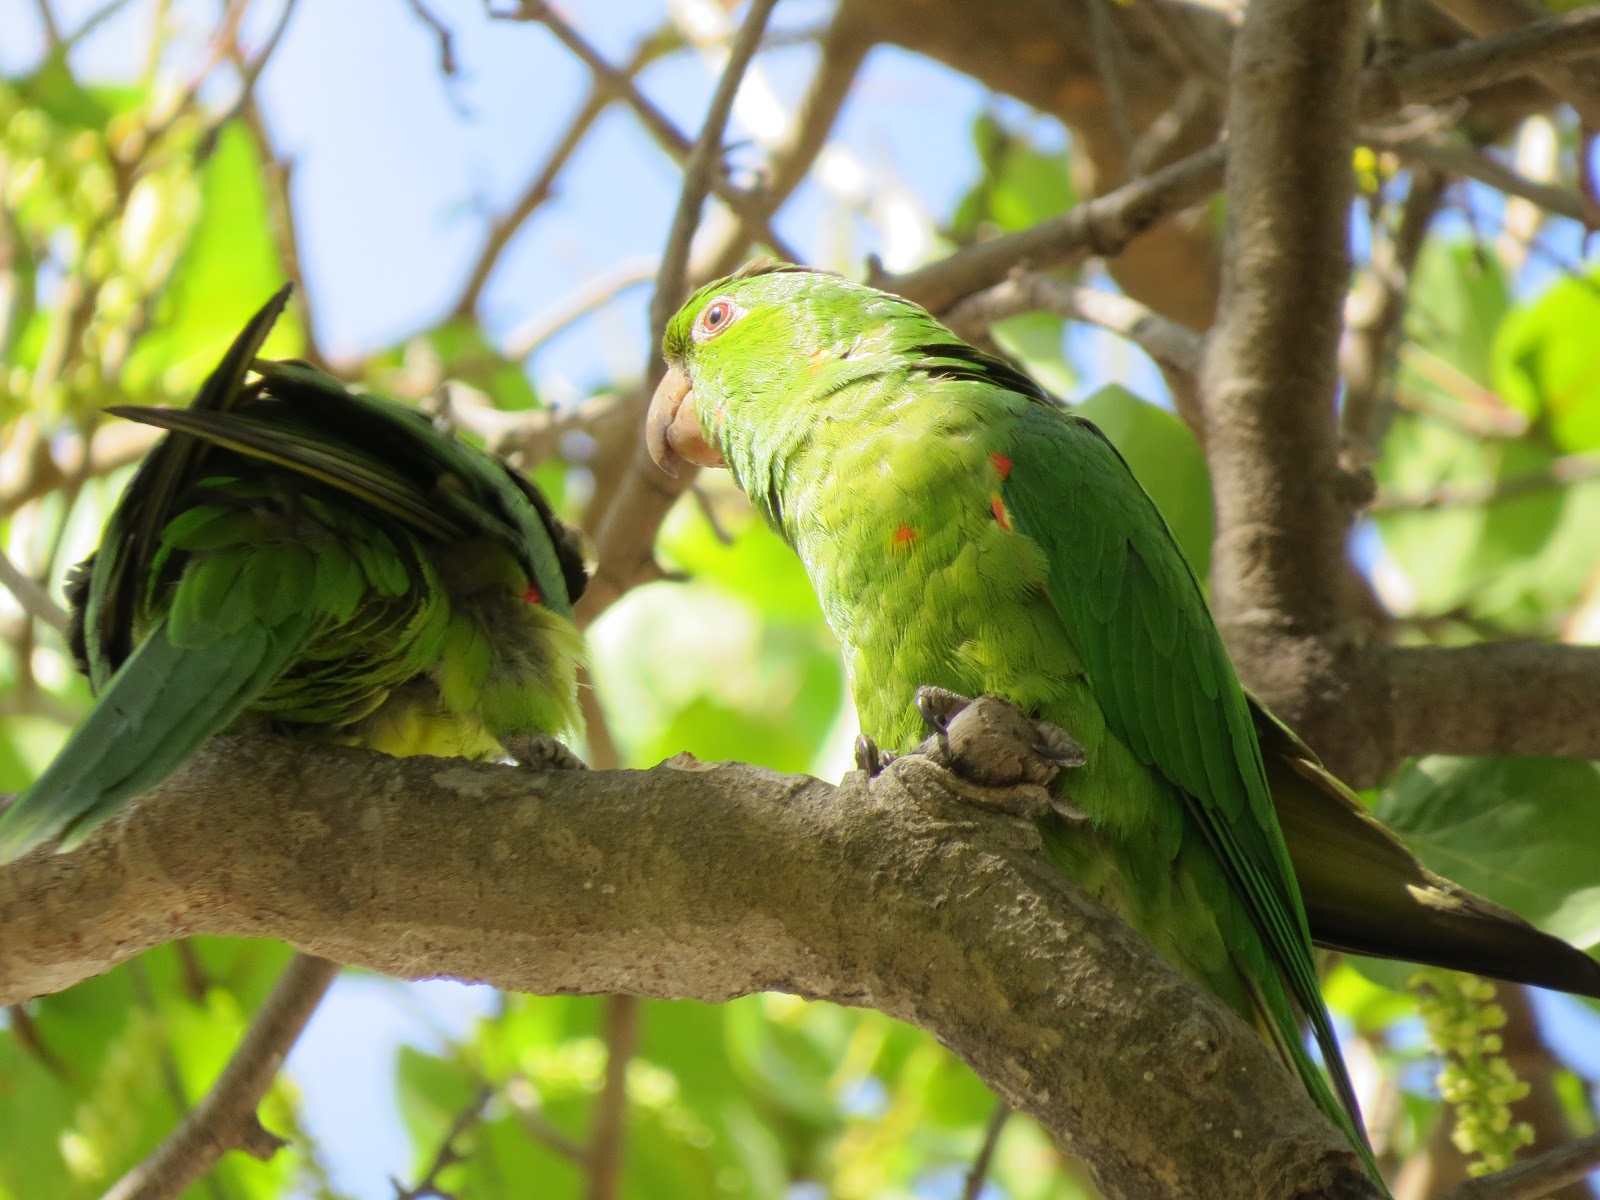 amateurnithologist: More Wild Parrots in Miami Beach